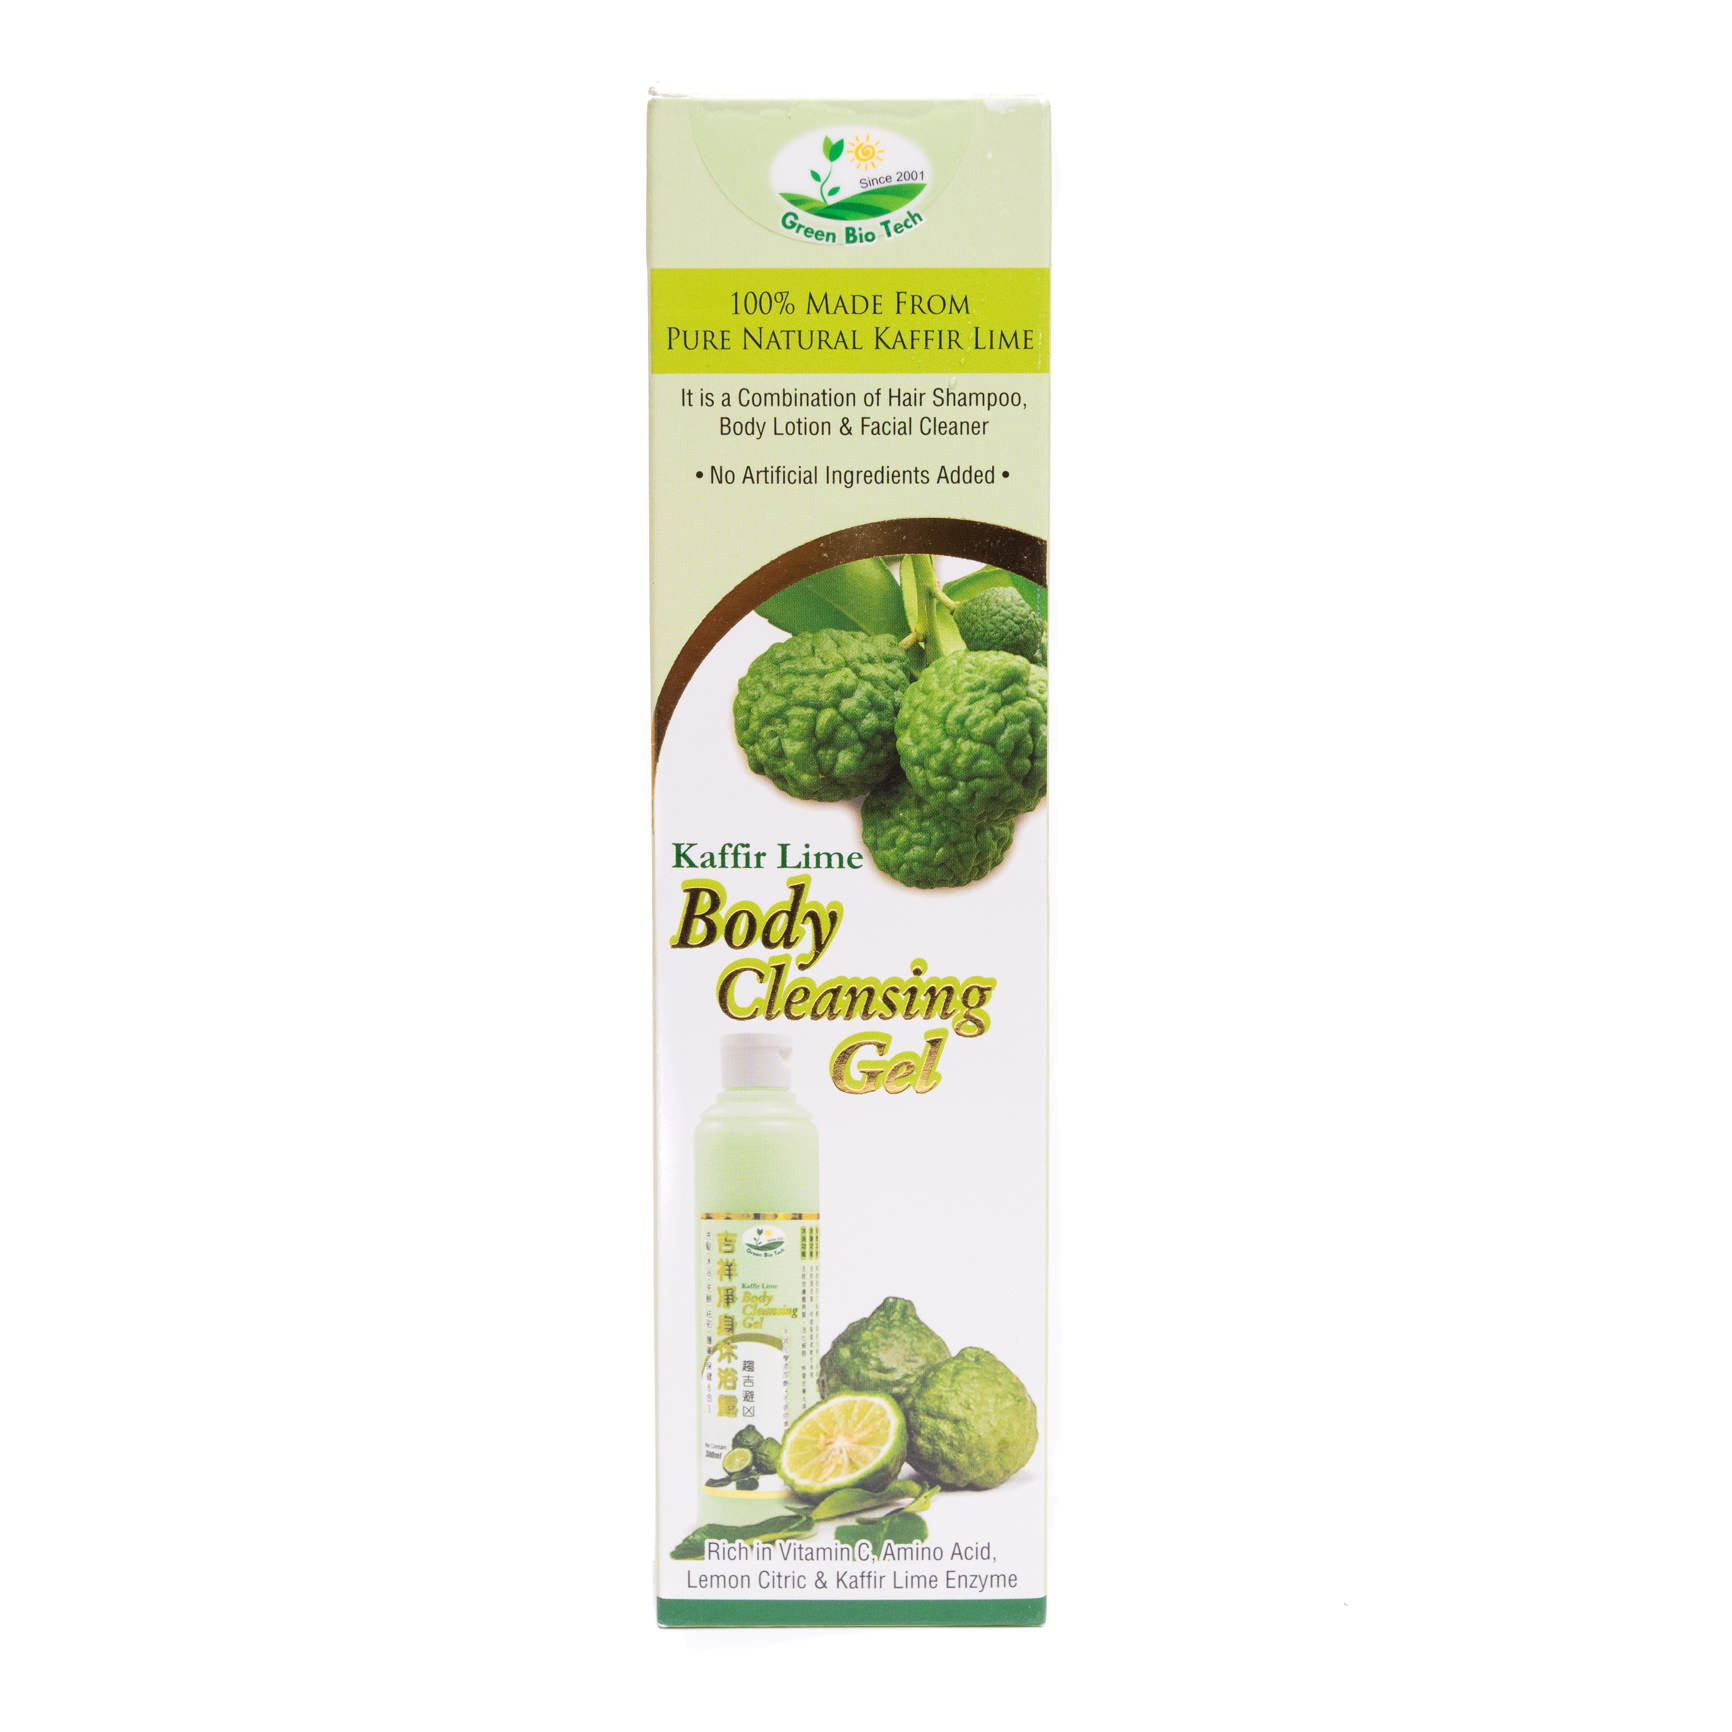 Kaffir Lime Body Cleansing Gel